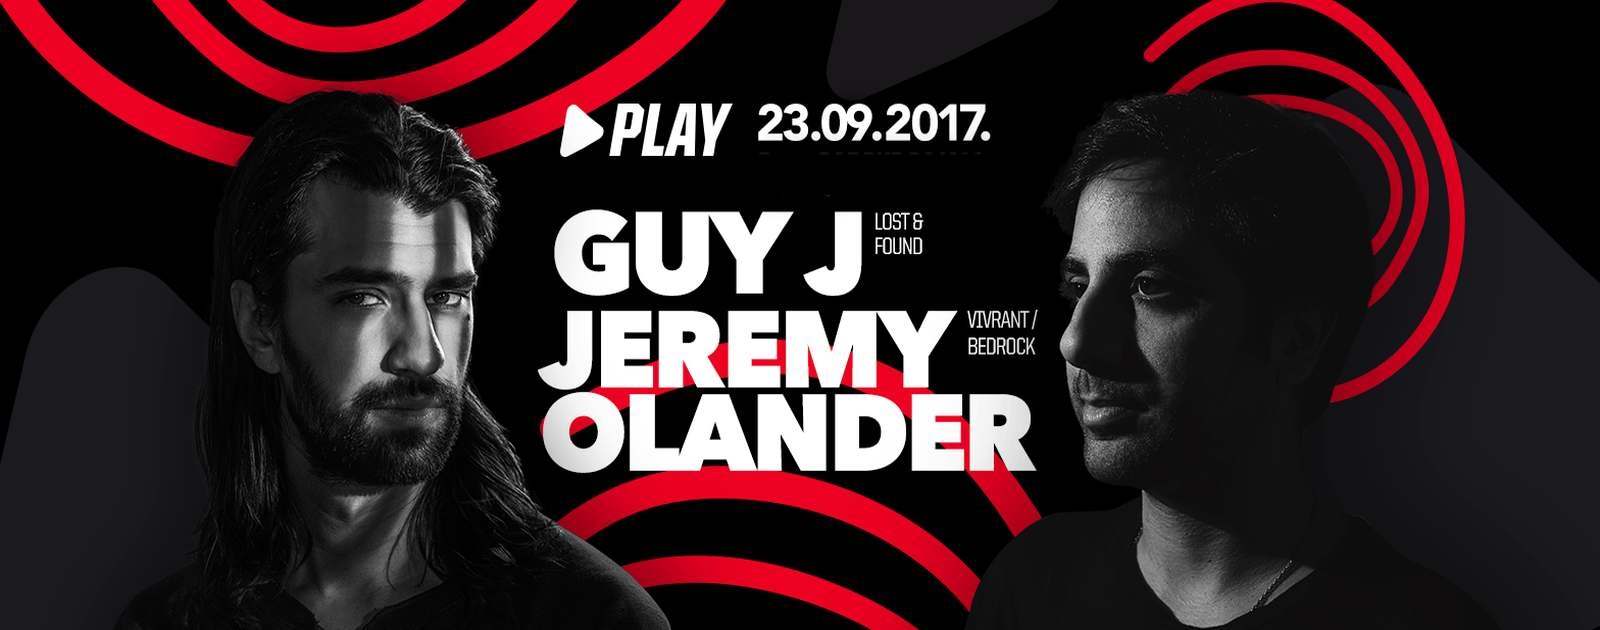 GUY J & JEREMY OLANDER 23.09.2017, Drugstore, Beograd